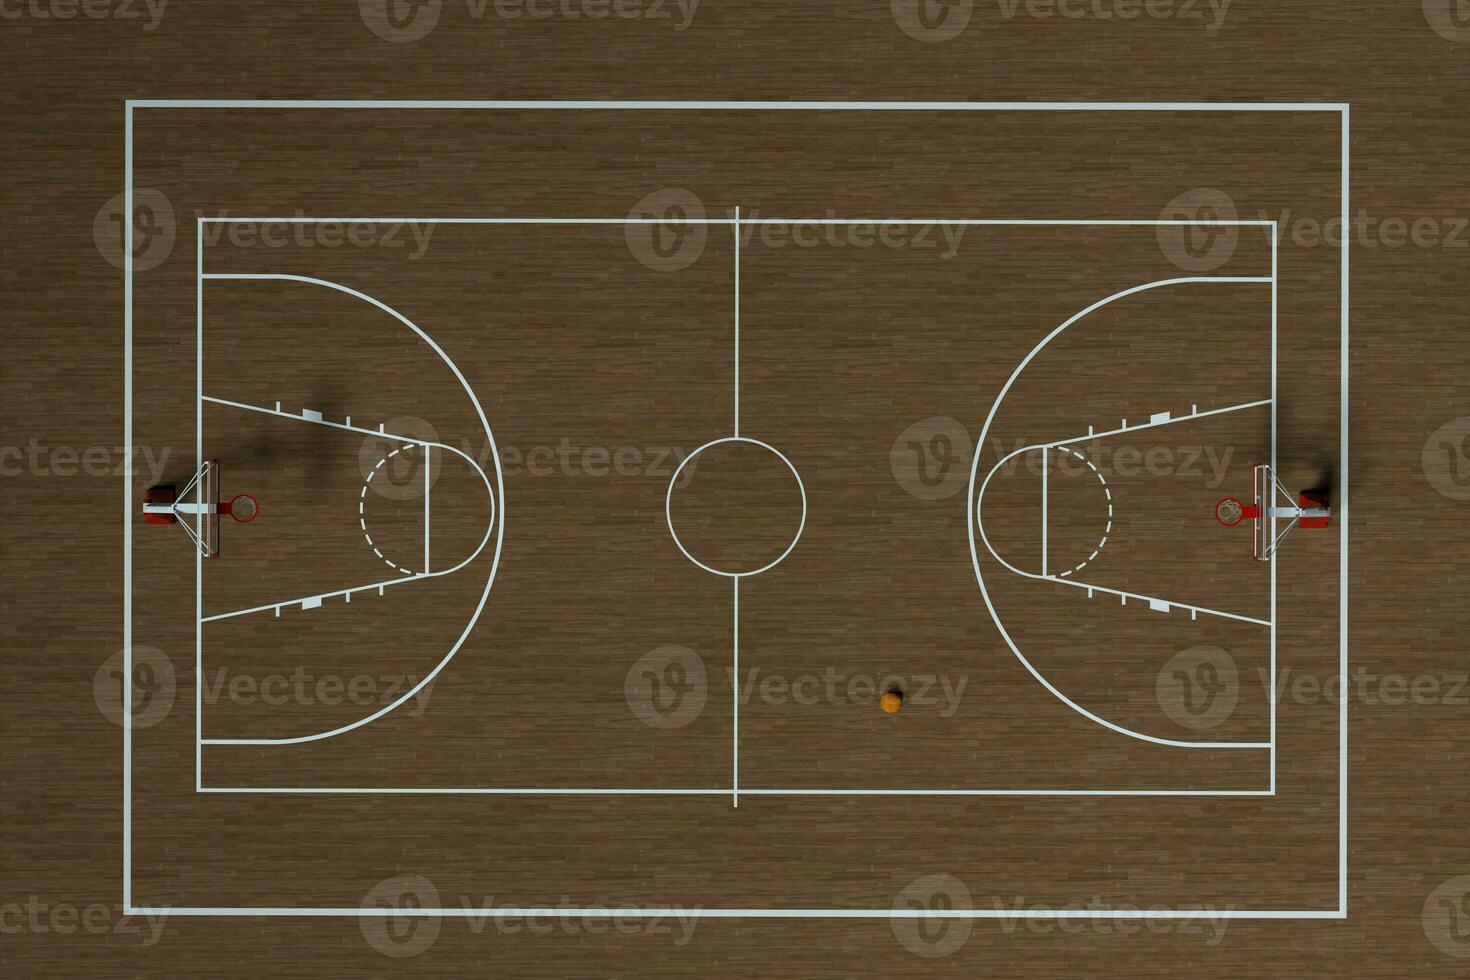 Basketball court with wooden floor, 3d rendering. photo